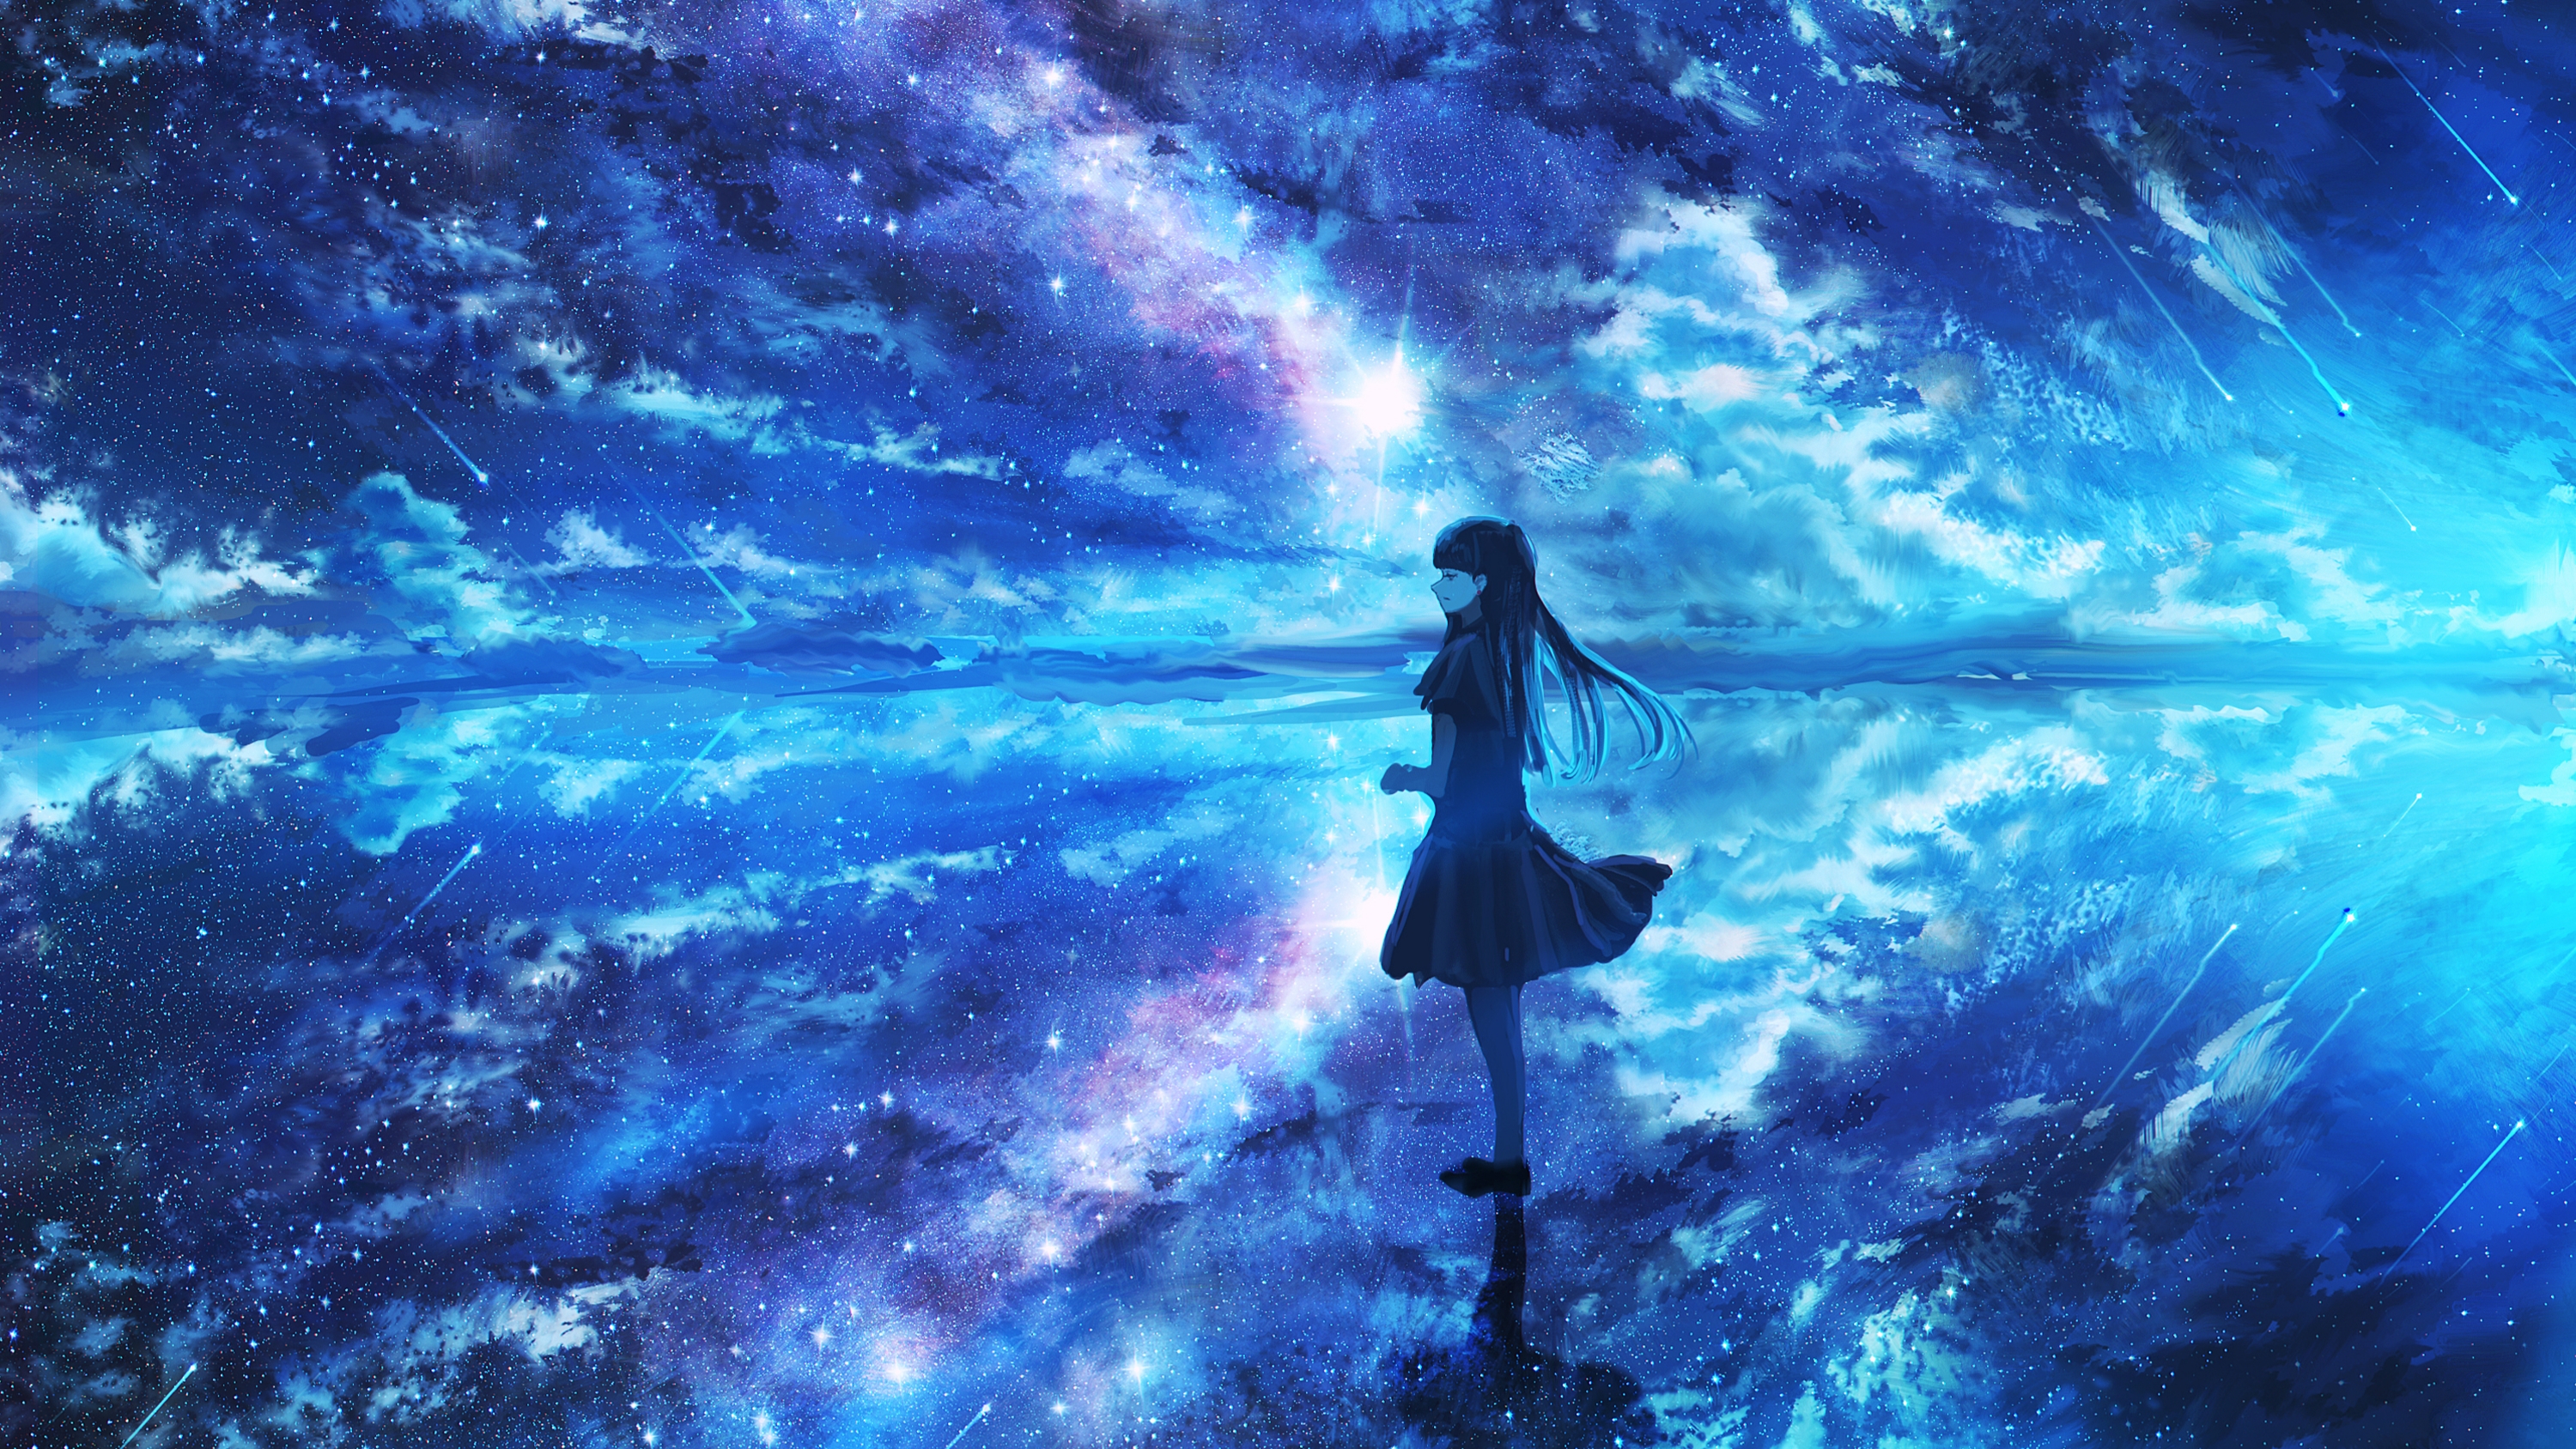 Anime 3000x1688 anime fantasy girl digital art artwork illustration fantasy art galaxy universe stars starry night starred sky sky skyscape reflection clouds environment dreamscape blue concept art night night sky